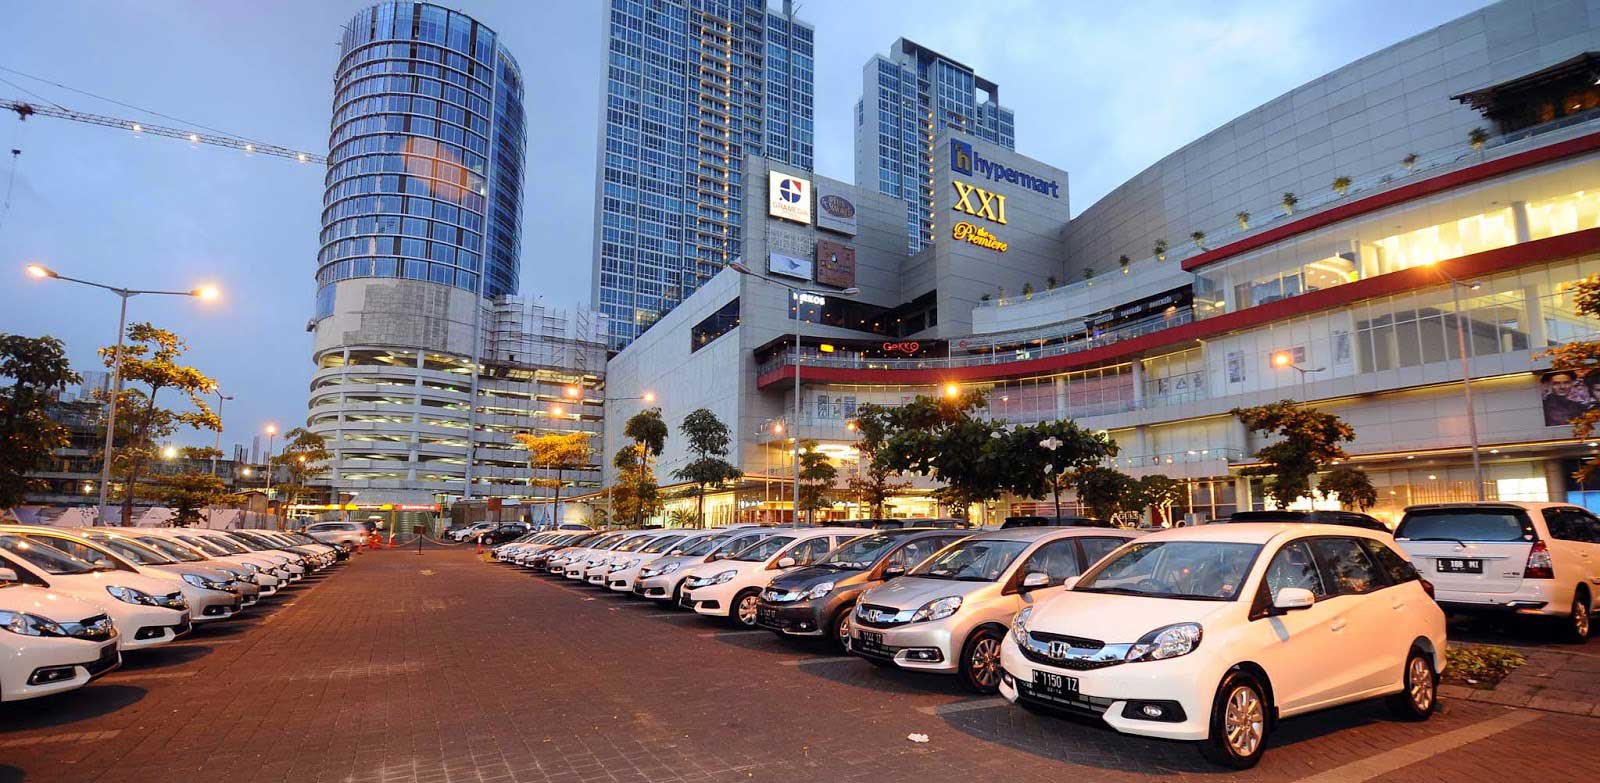 10 Mall Pusat Perbelanjaan Paling Populer di Surabaya 